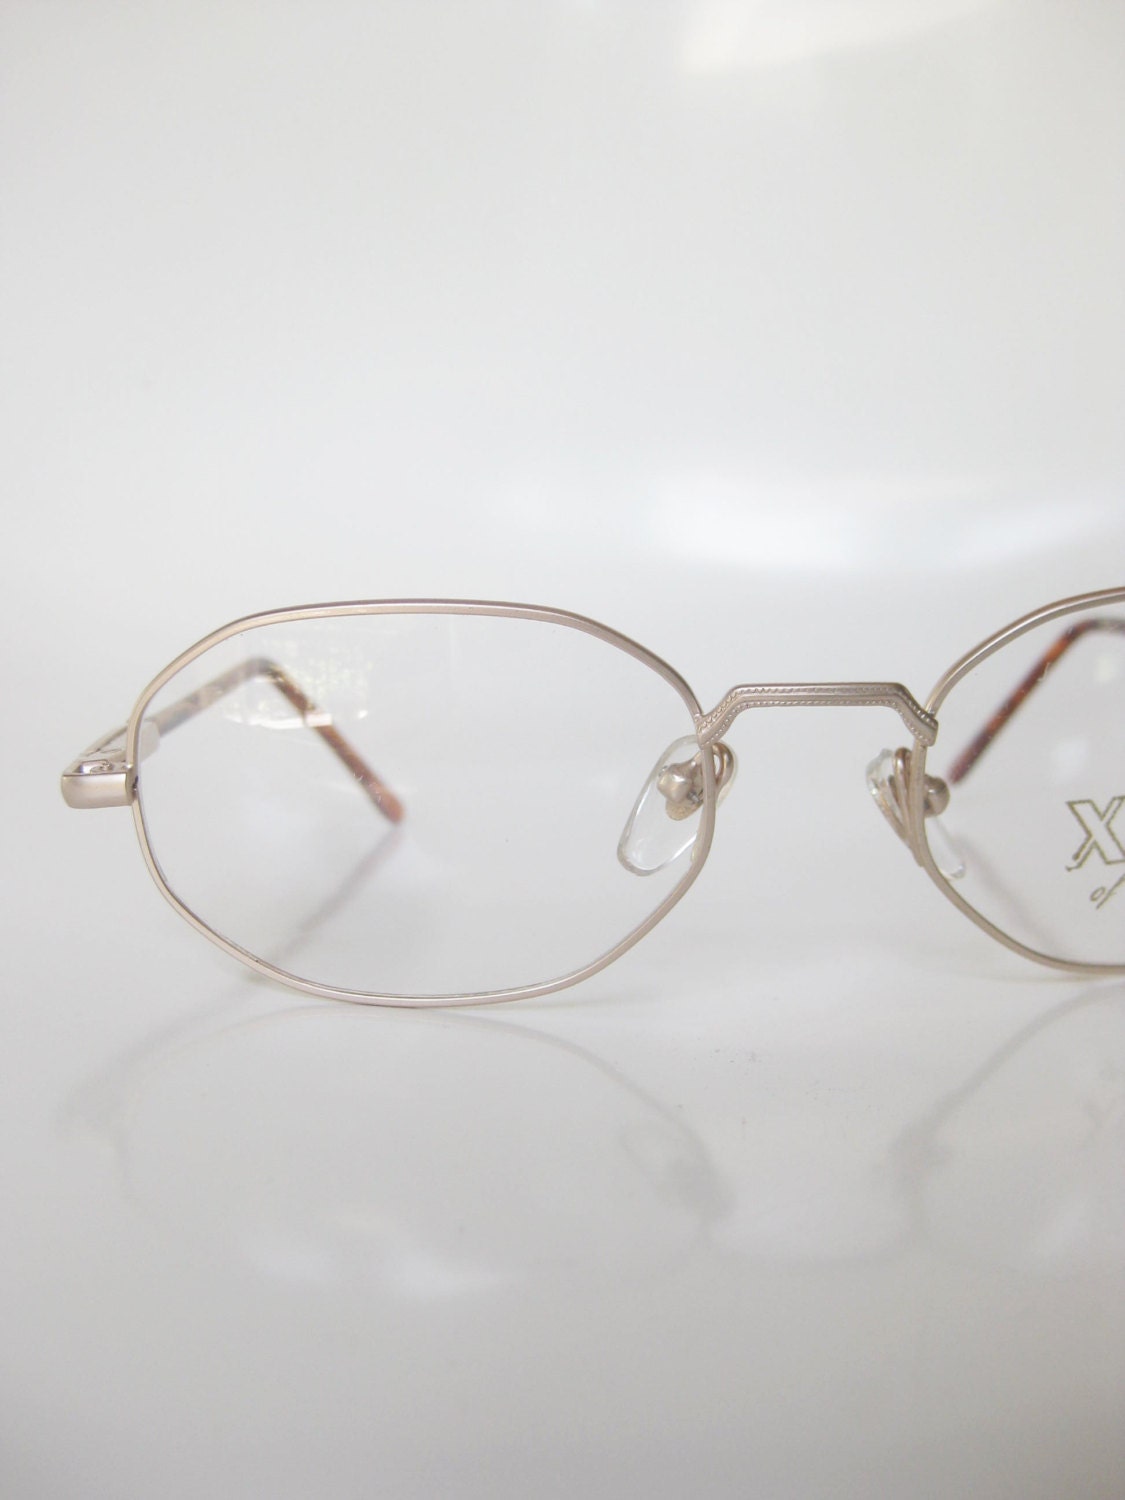 Vintage 1970s Metal Octagonal Frames Eyeglasses Womens Reading